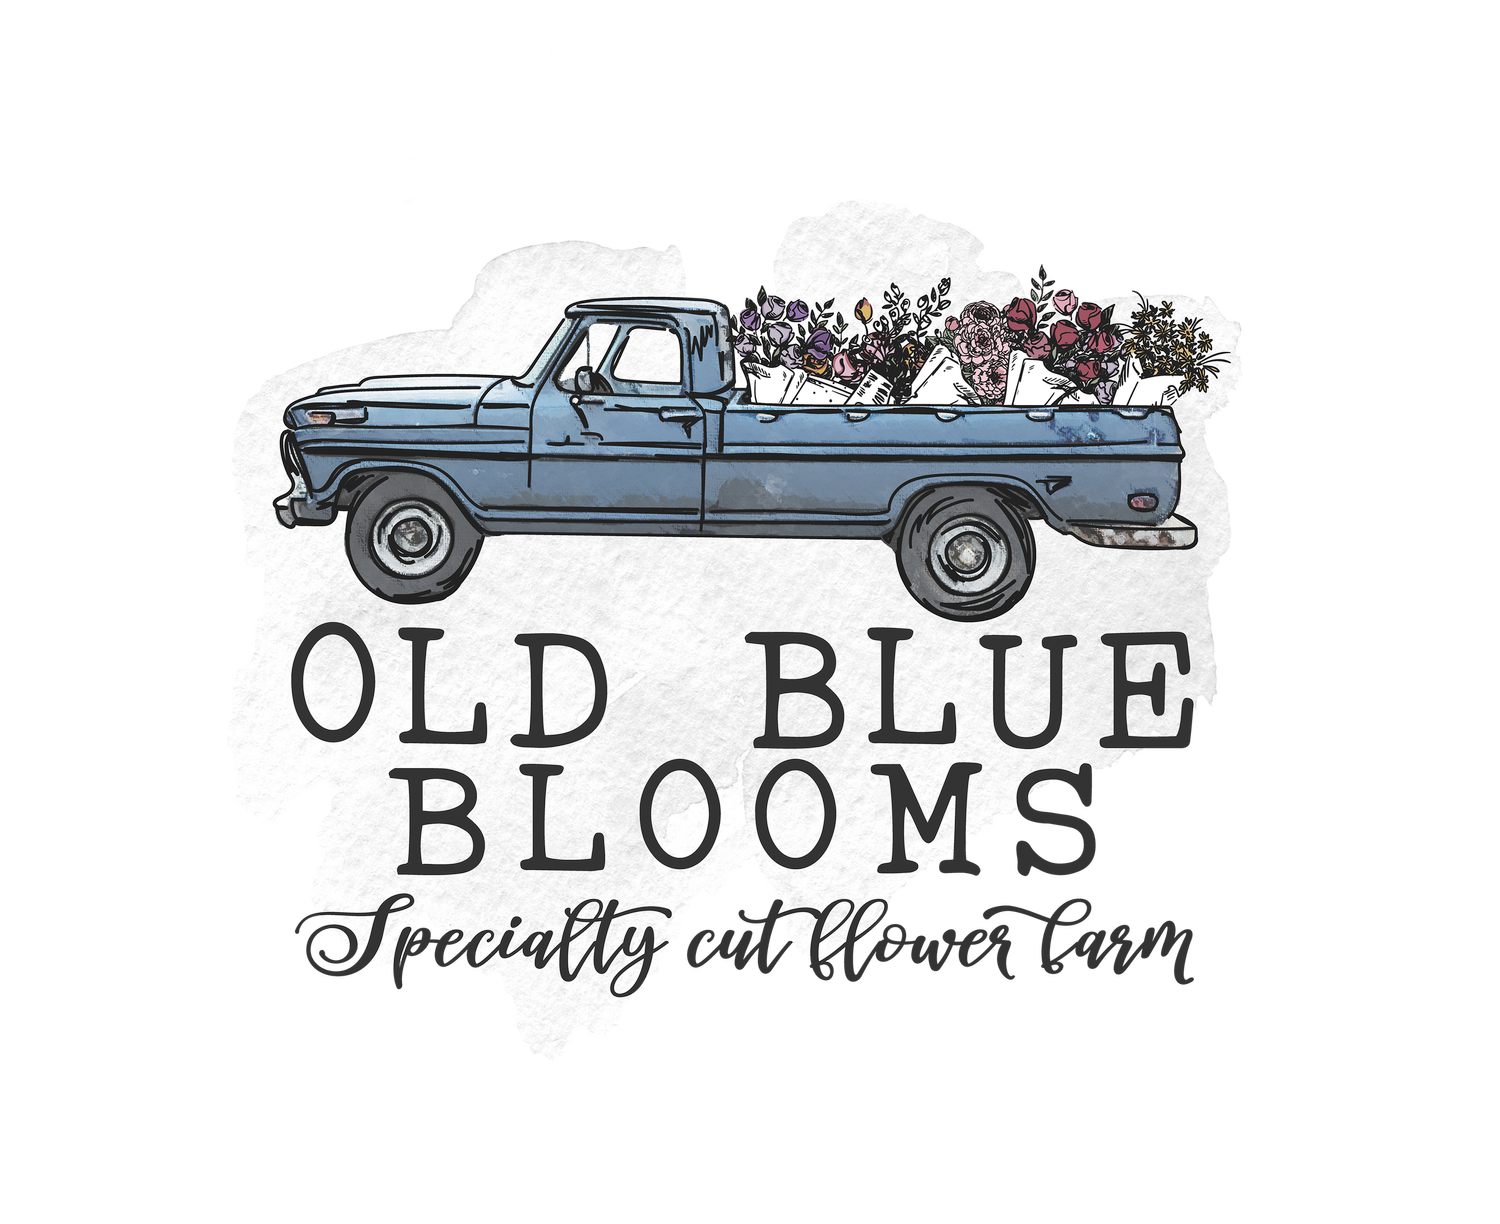 Old Blue Blooms